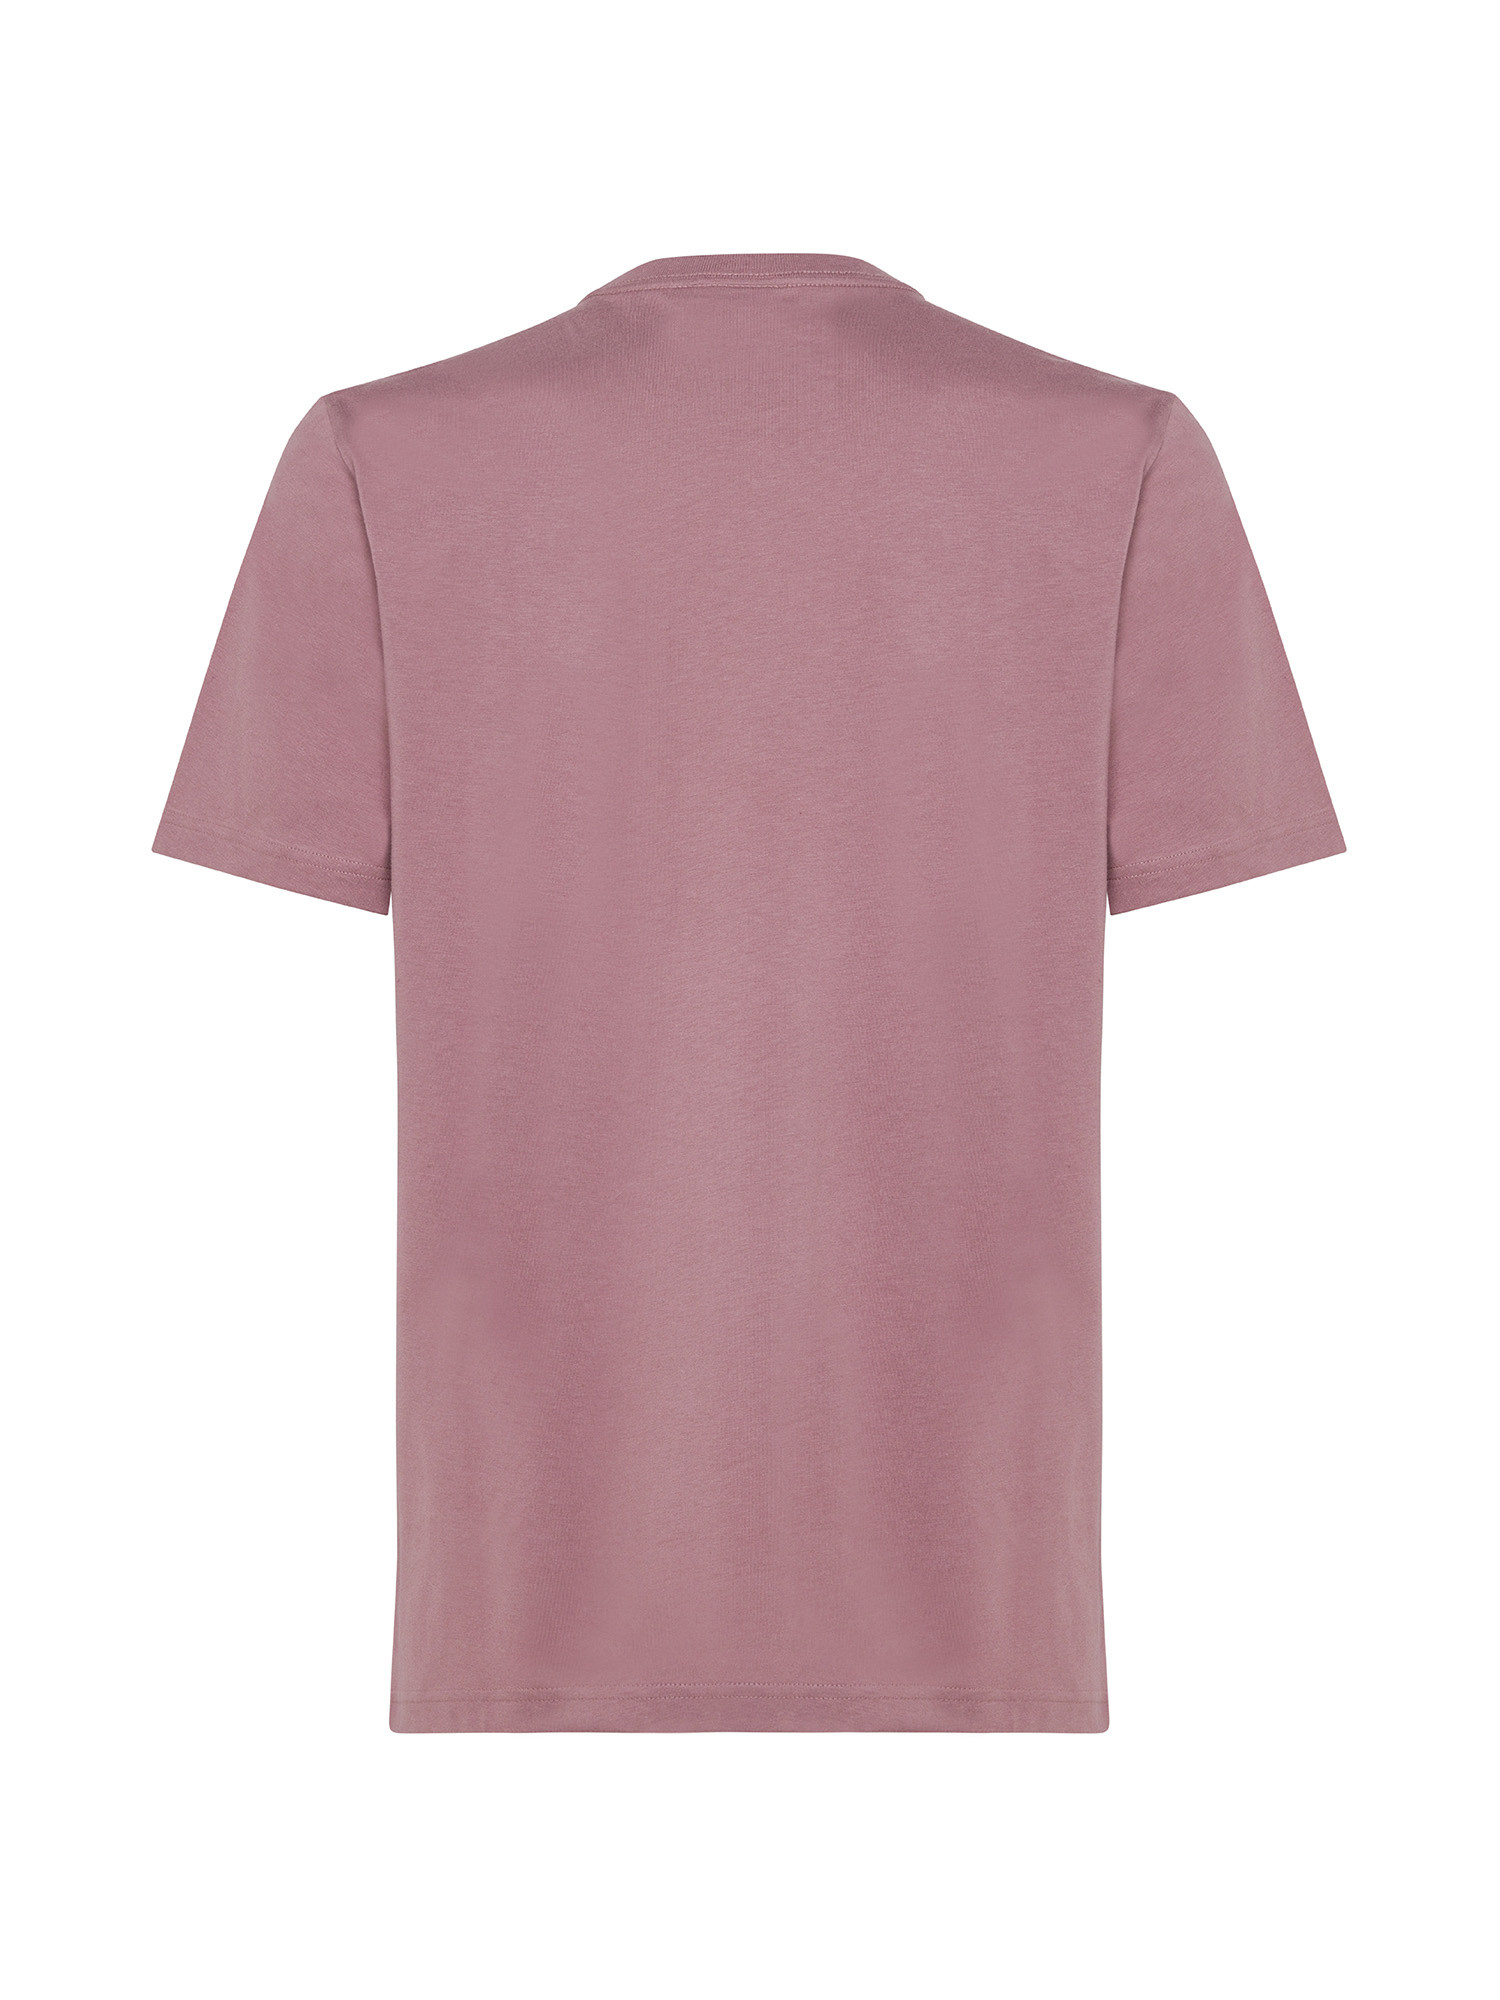 Adidas - Crewneck T-shirt with logo, Antique Pink, large image number 1